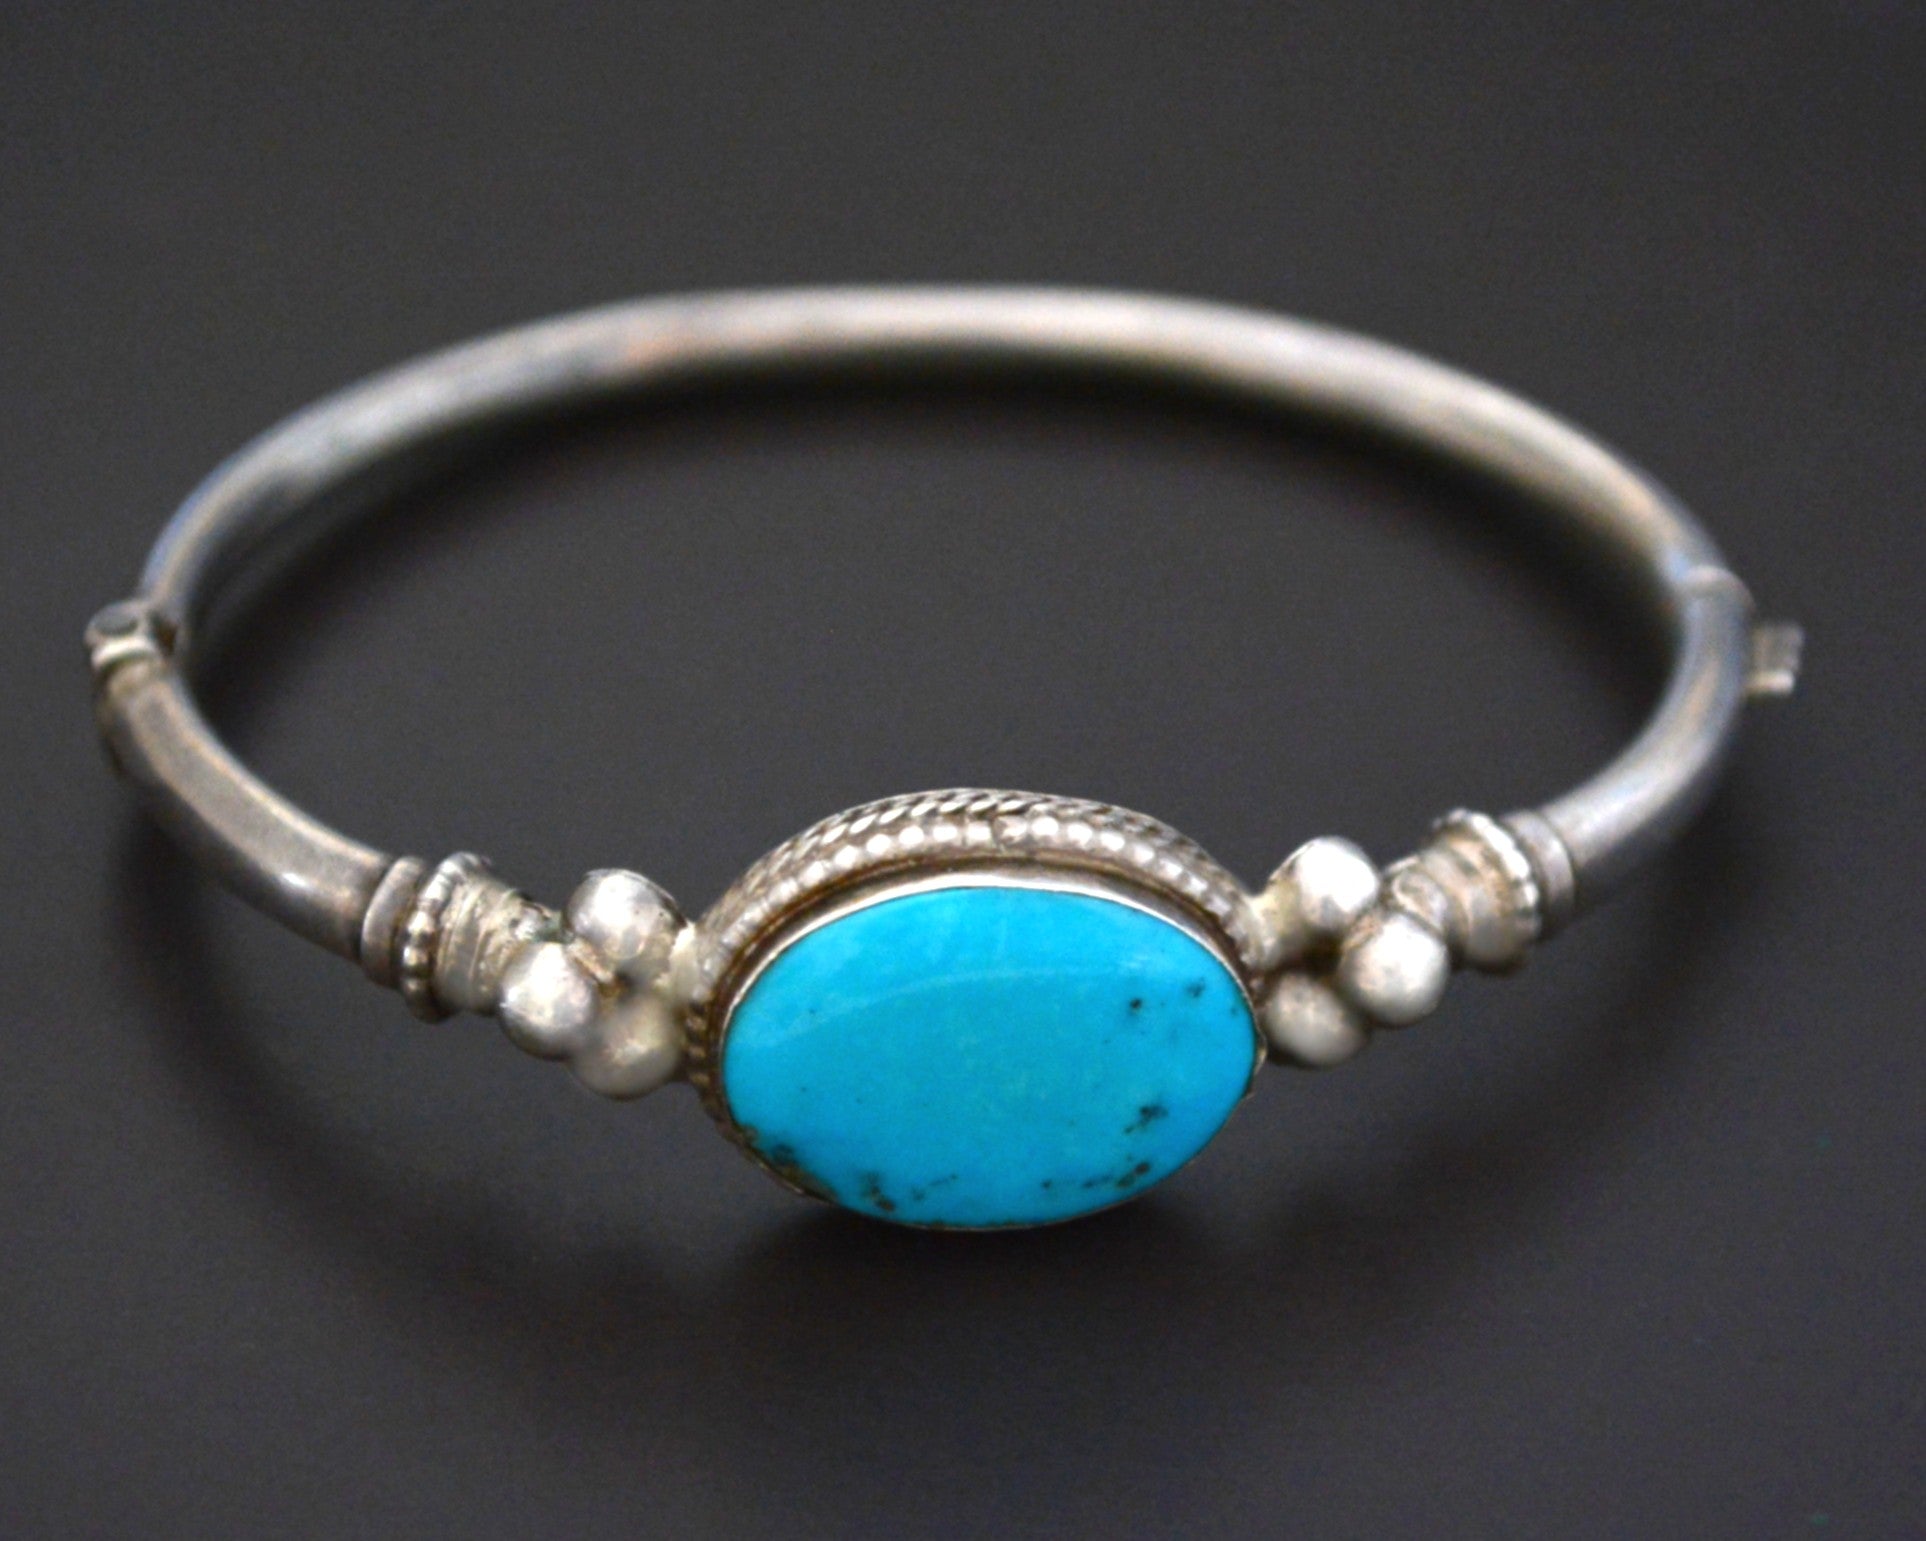 Vintage Turquoise Bracelet from India - SMALL/MEDIUM - Hinged